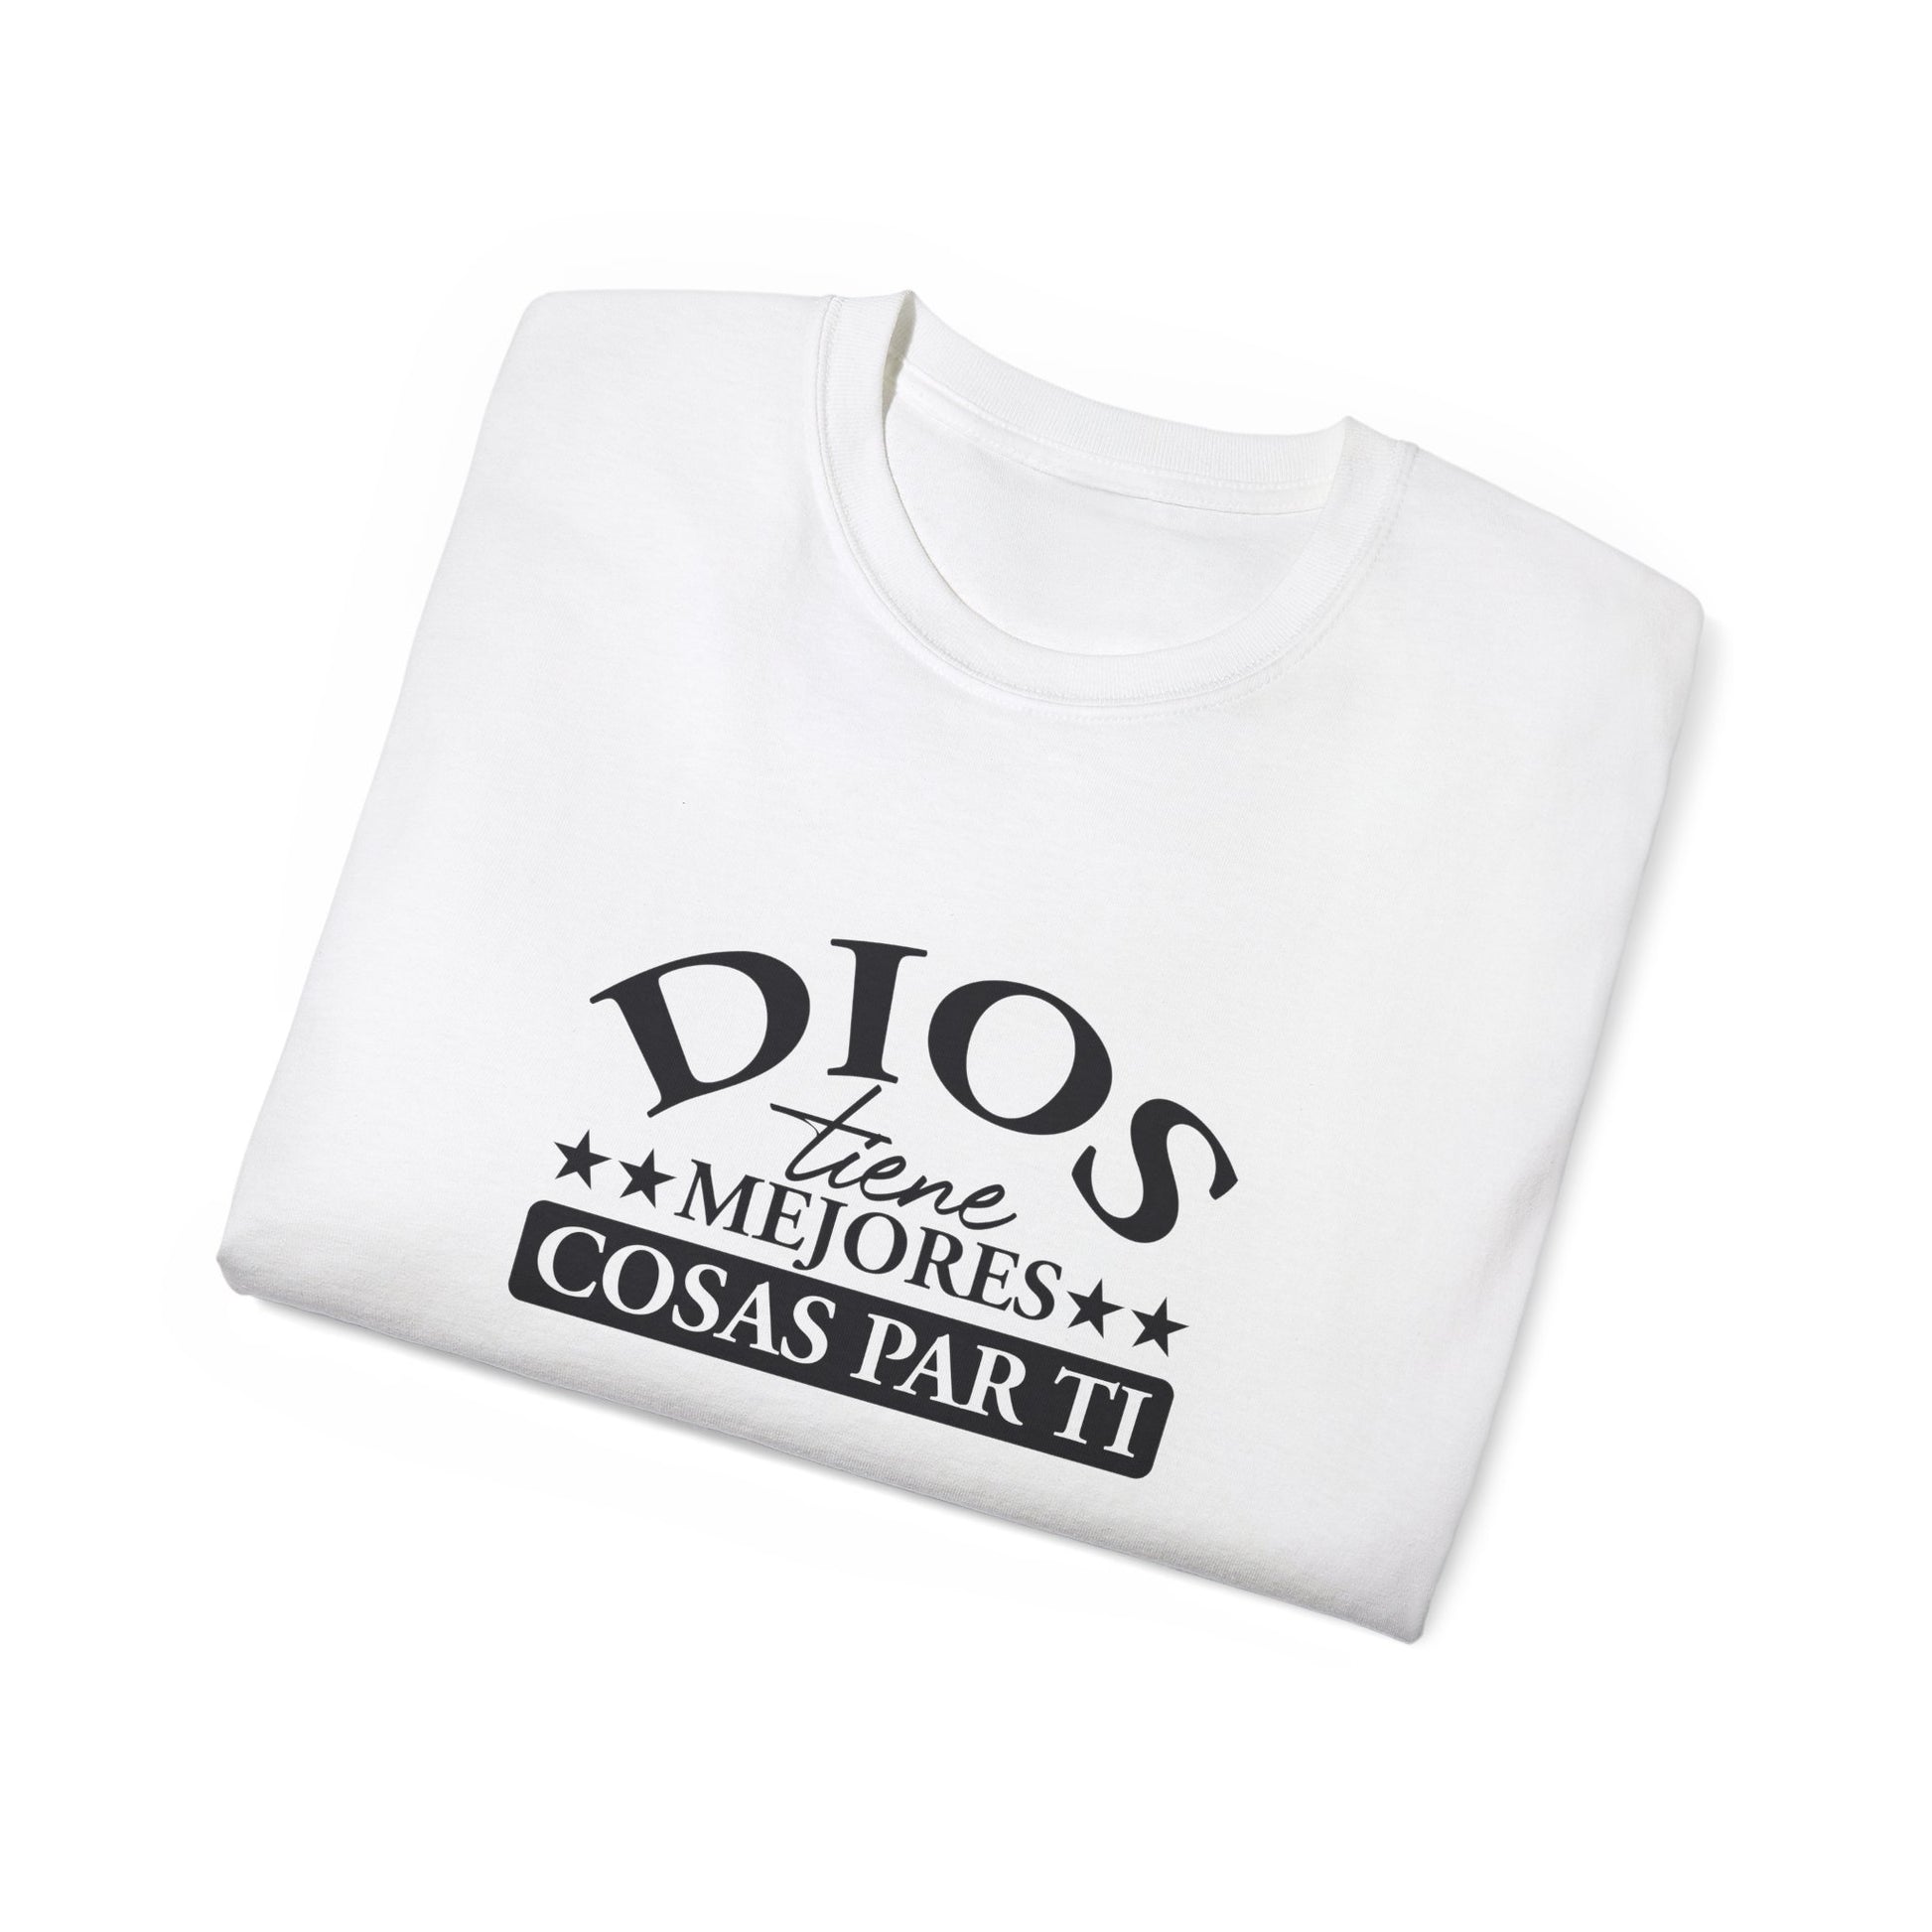 DIOS TIENE MEJORES COSAS PAR TI Christian Spanish Unisex T-shirt Printify